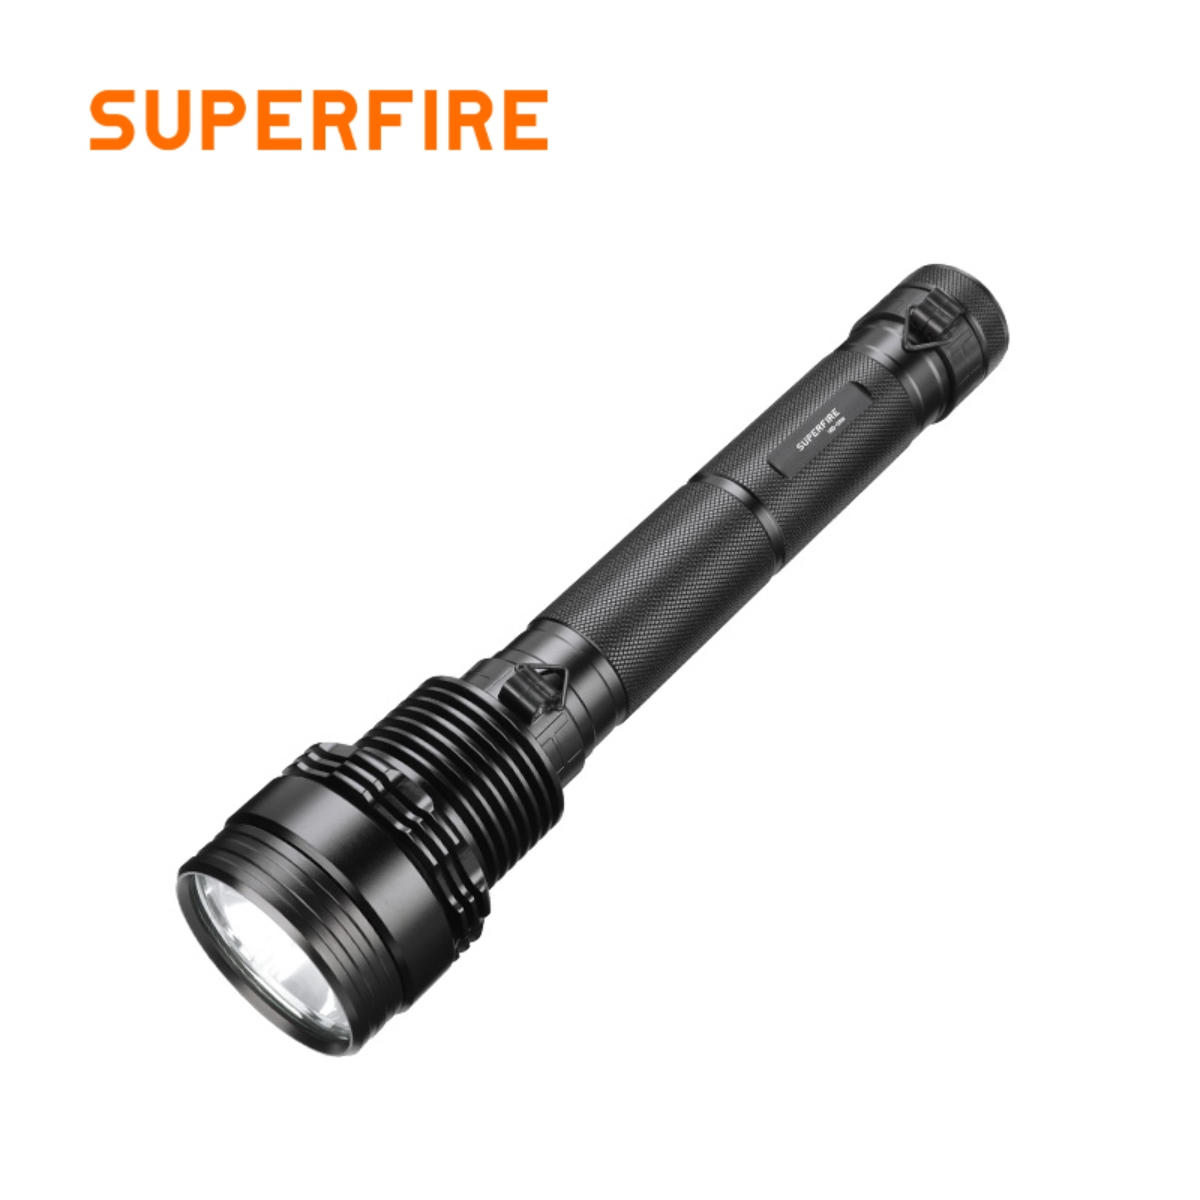 SUPERFIRE HID 35W 3500 Lumen Xenon Flashlight